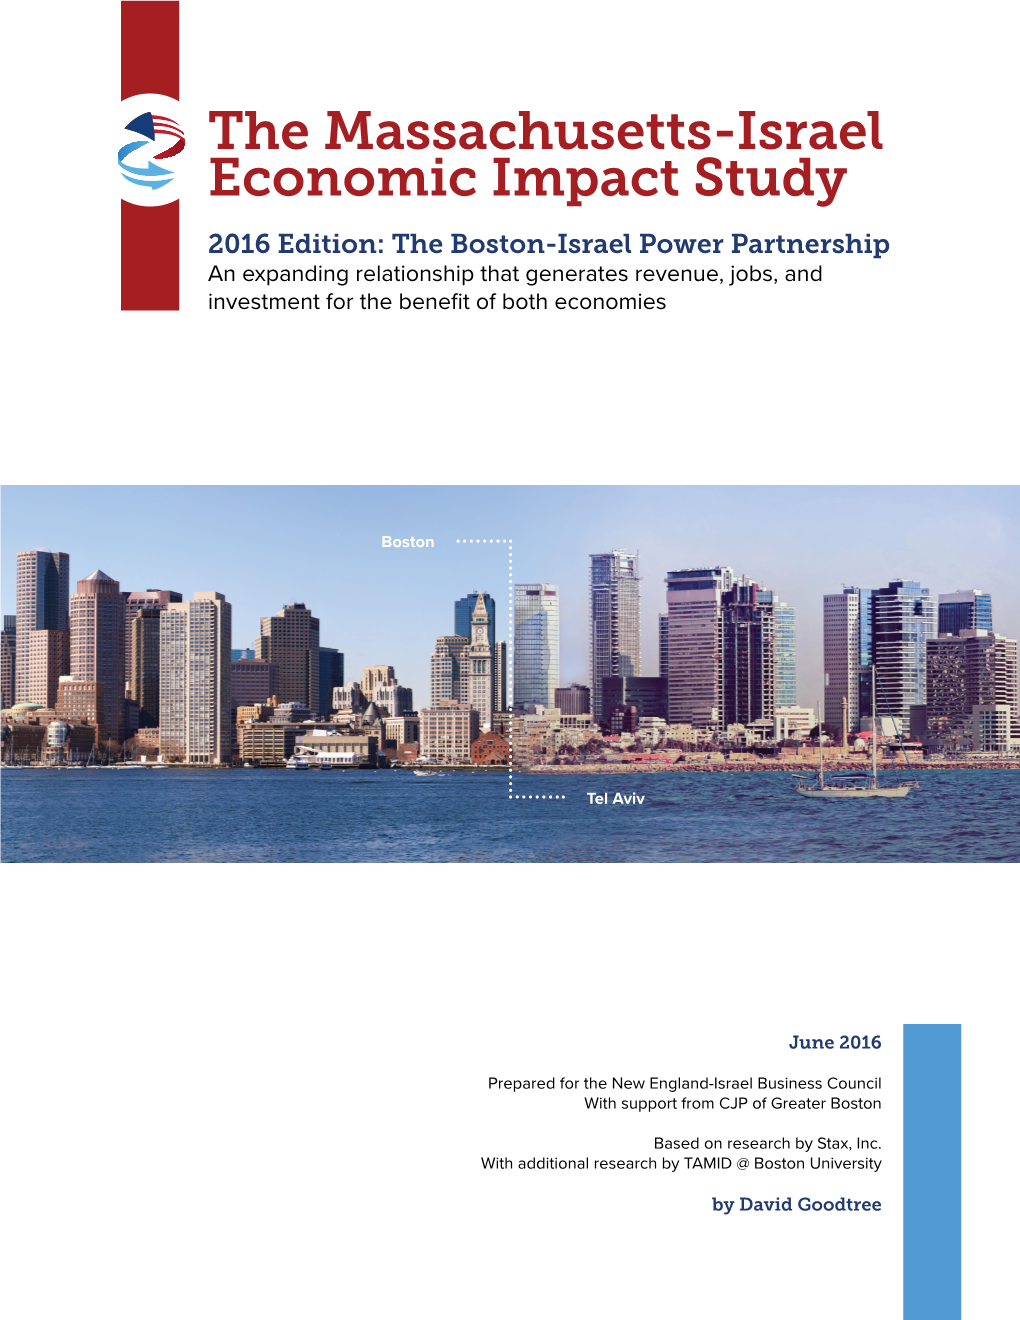 The Massachusetts-Israel Economic Impact Study